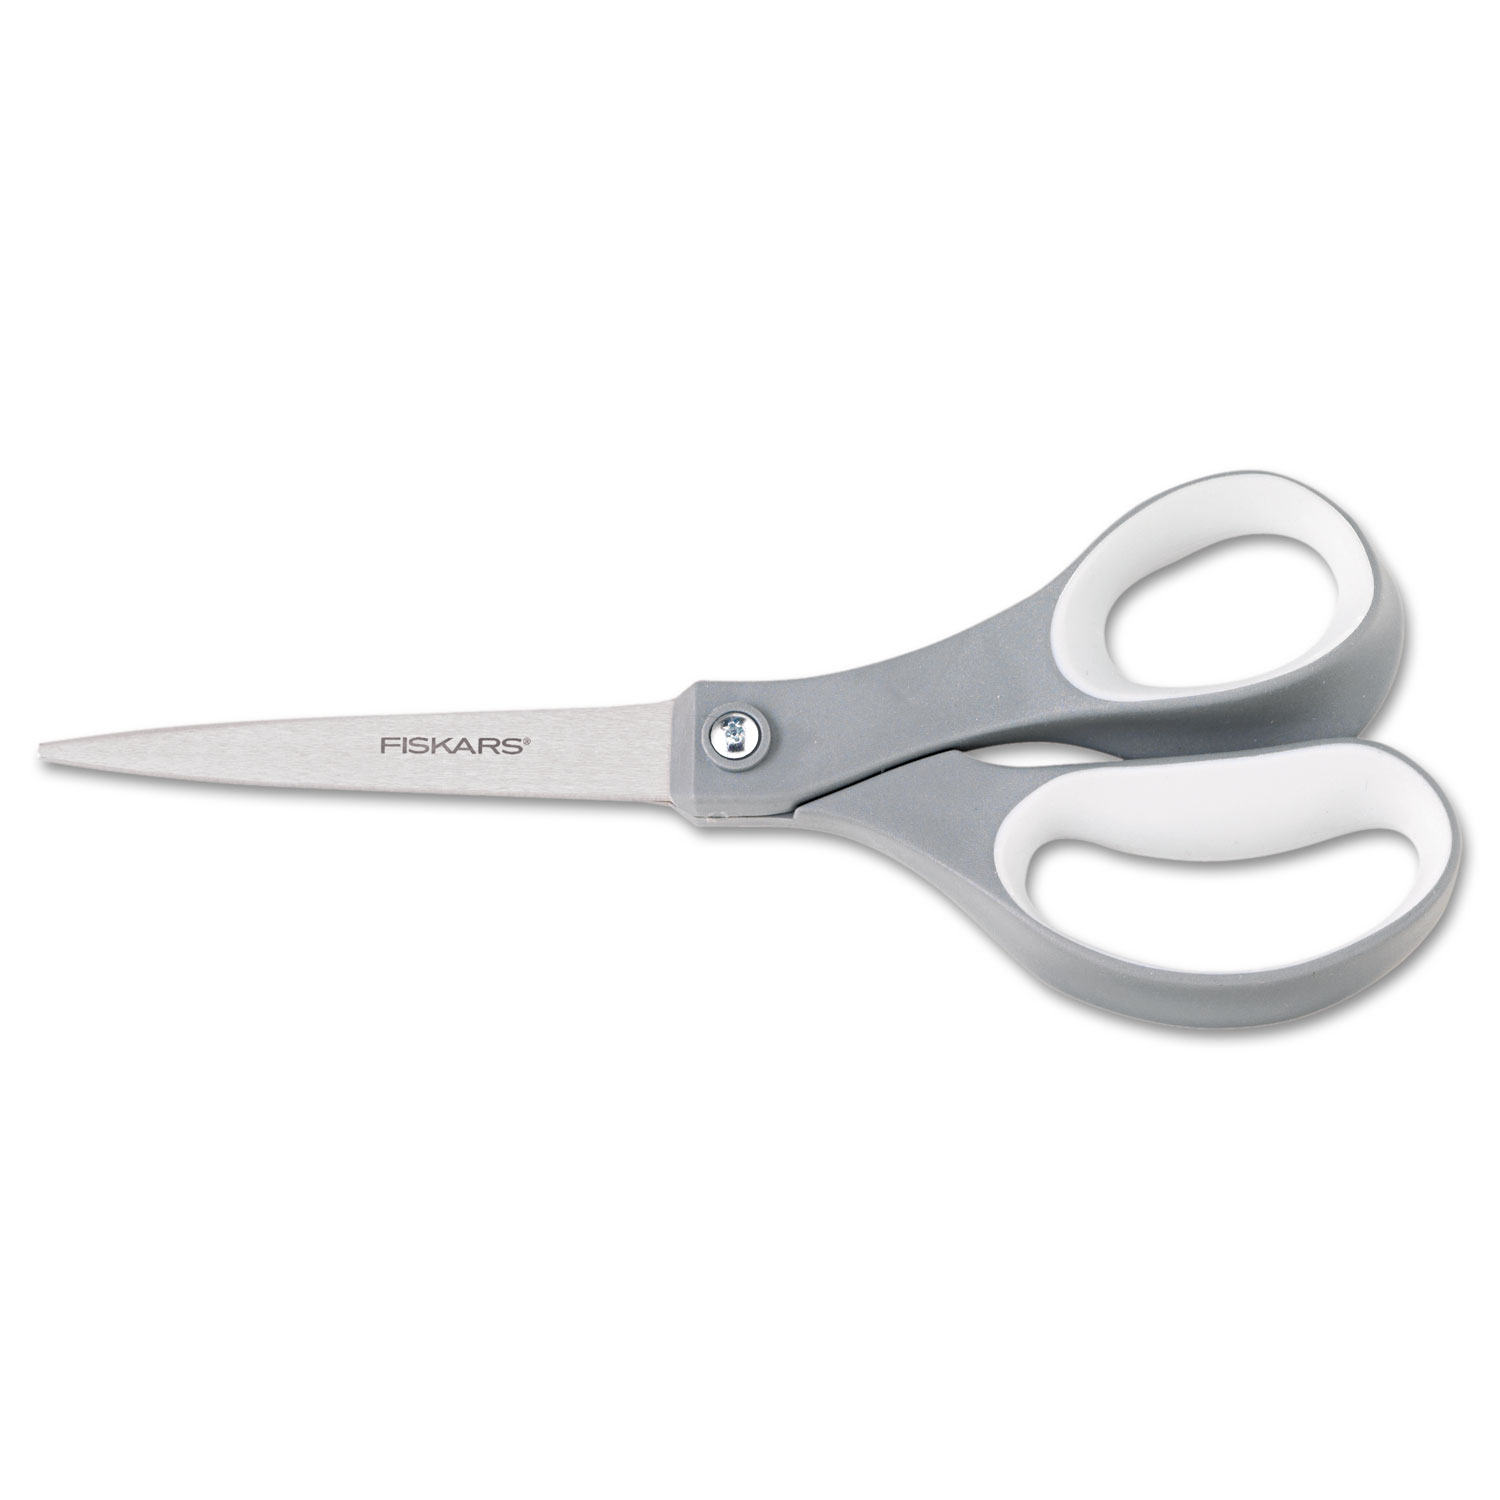  Fiskars 01-004761J Contoured Performance Scissors, 8 Long, 3.13 Cut Length, Gray Straight Handle (FSK01004761J) 